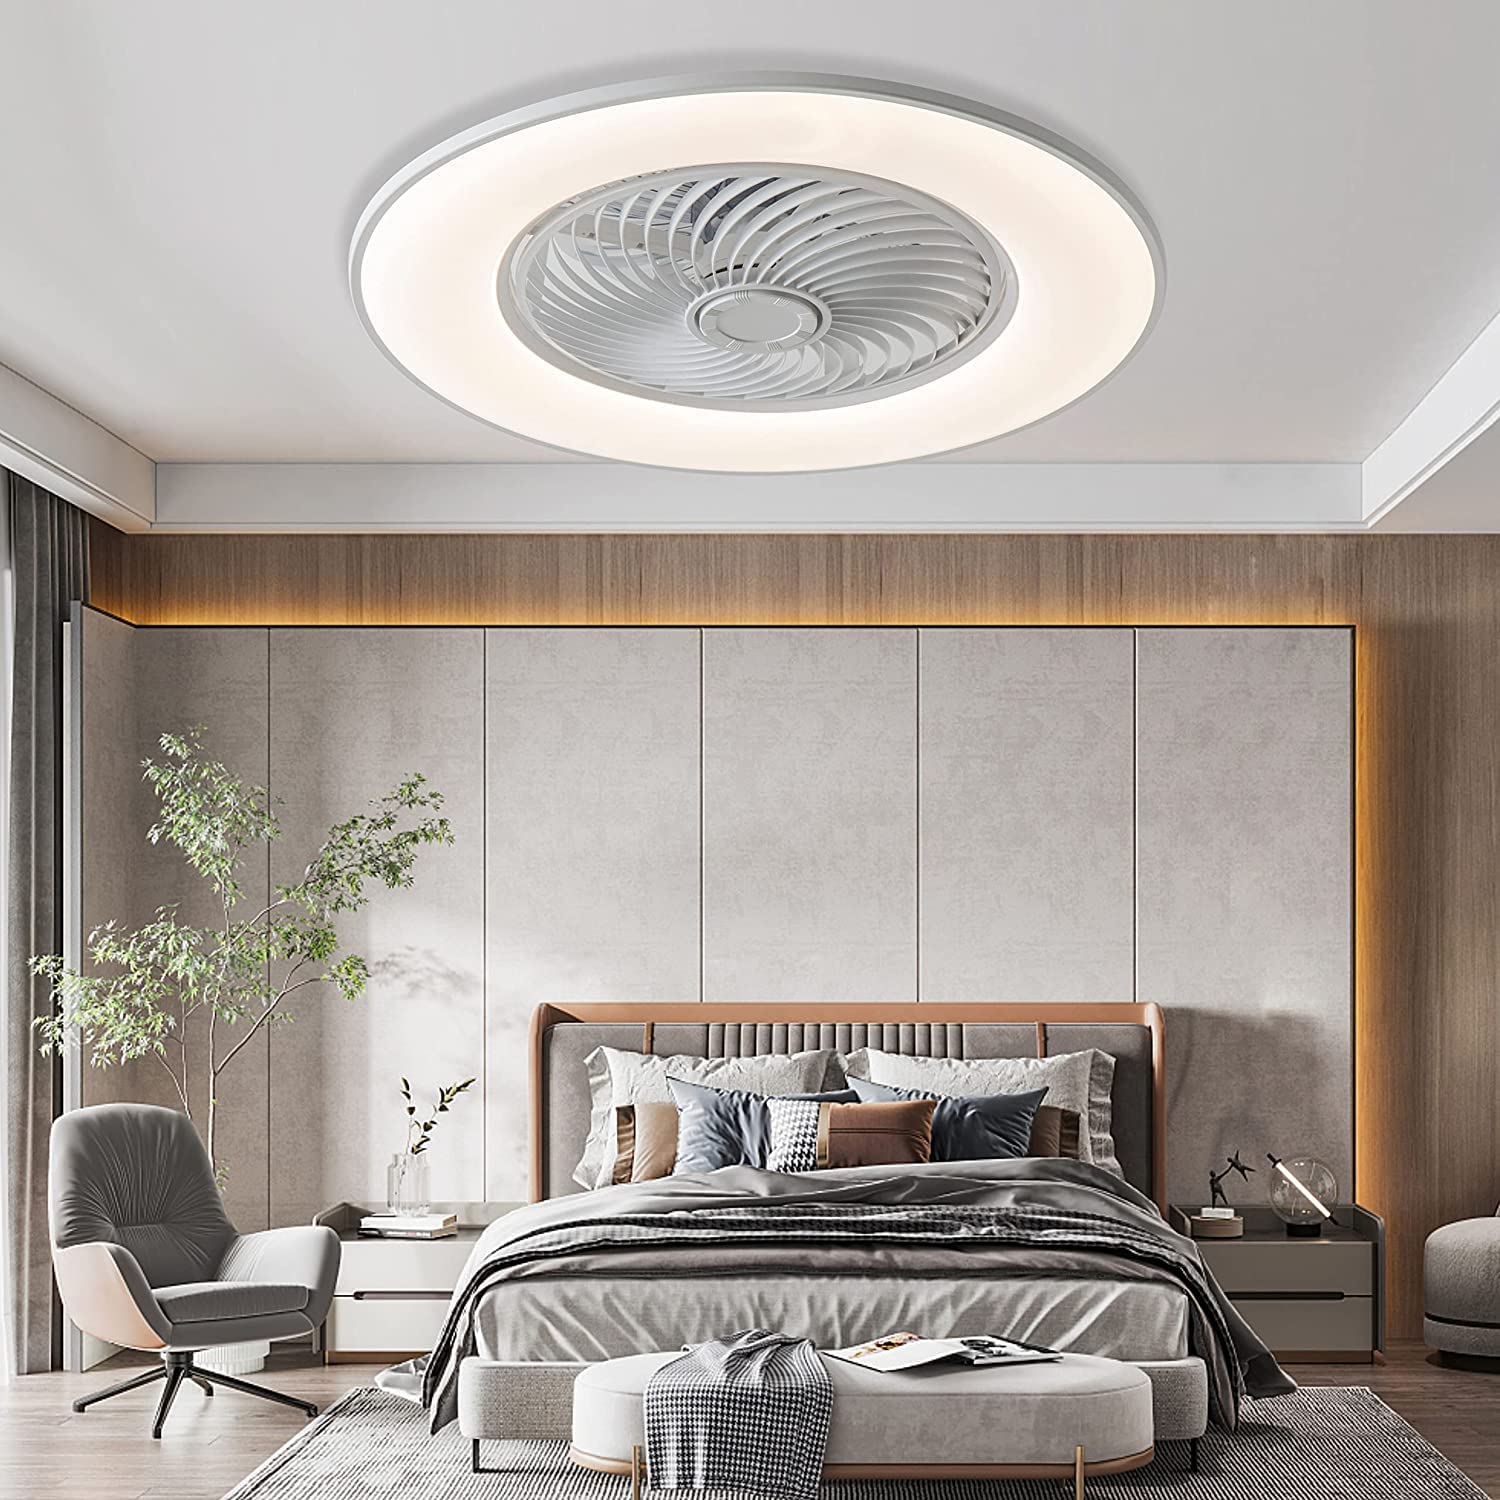 پنکه سقفی بانور Ceiling Fan with Light Modern - ارسال ۱۰ الی ۱۵ روز کاری